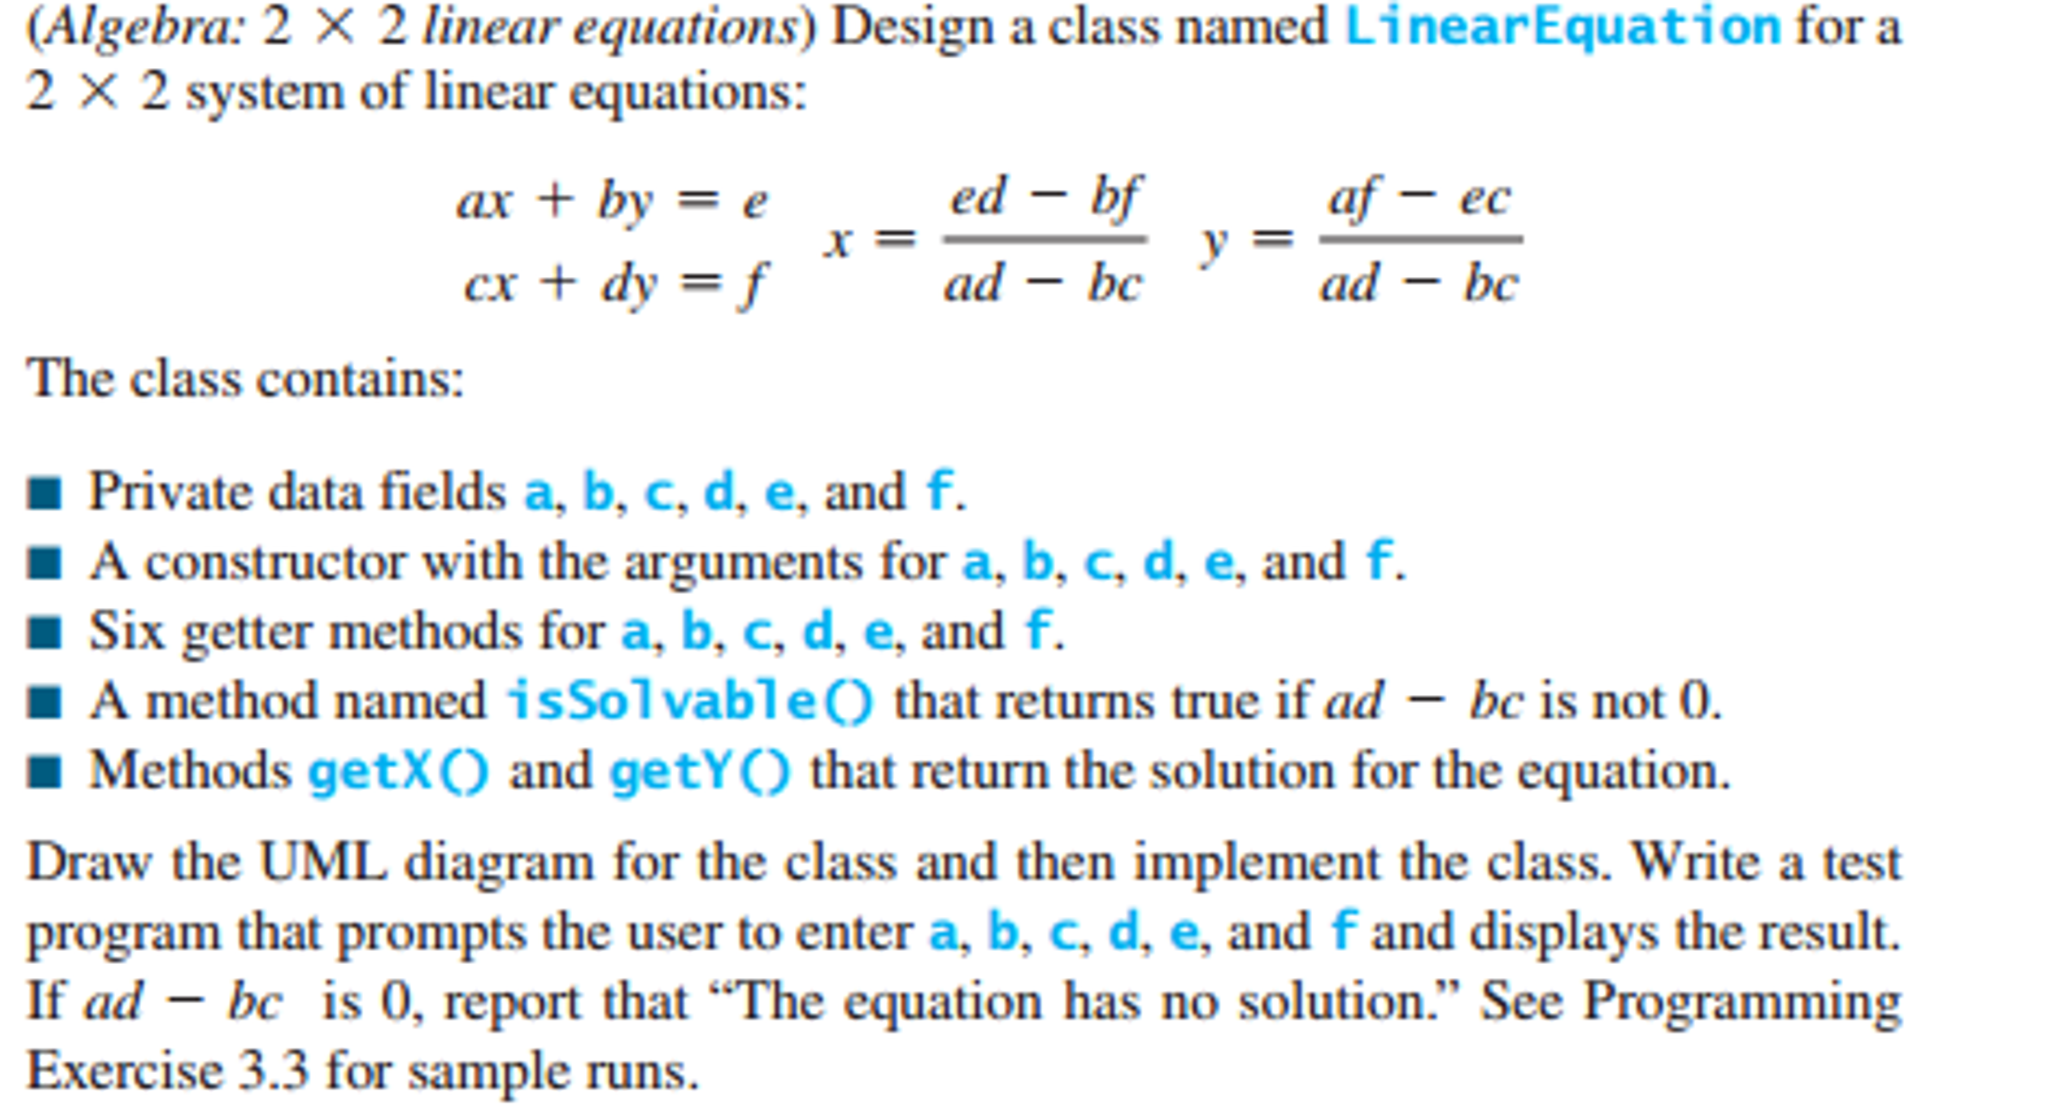 linear equations in algebra 2 definition